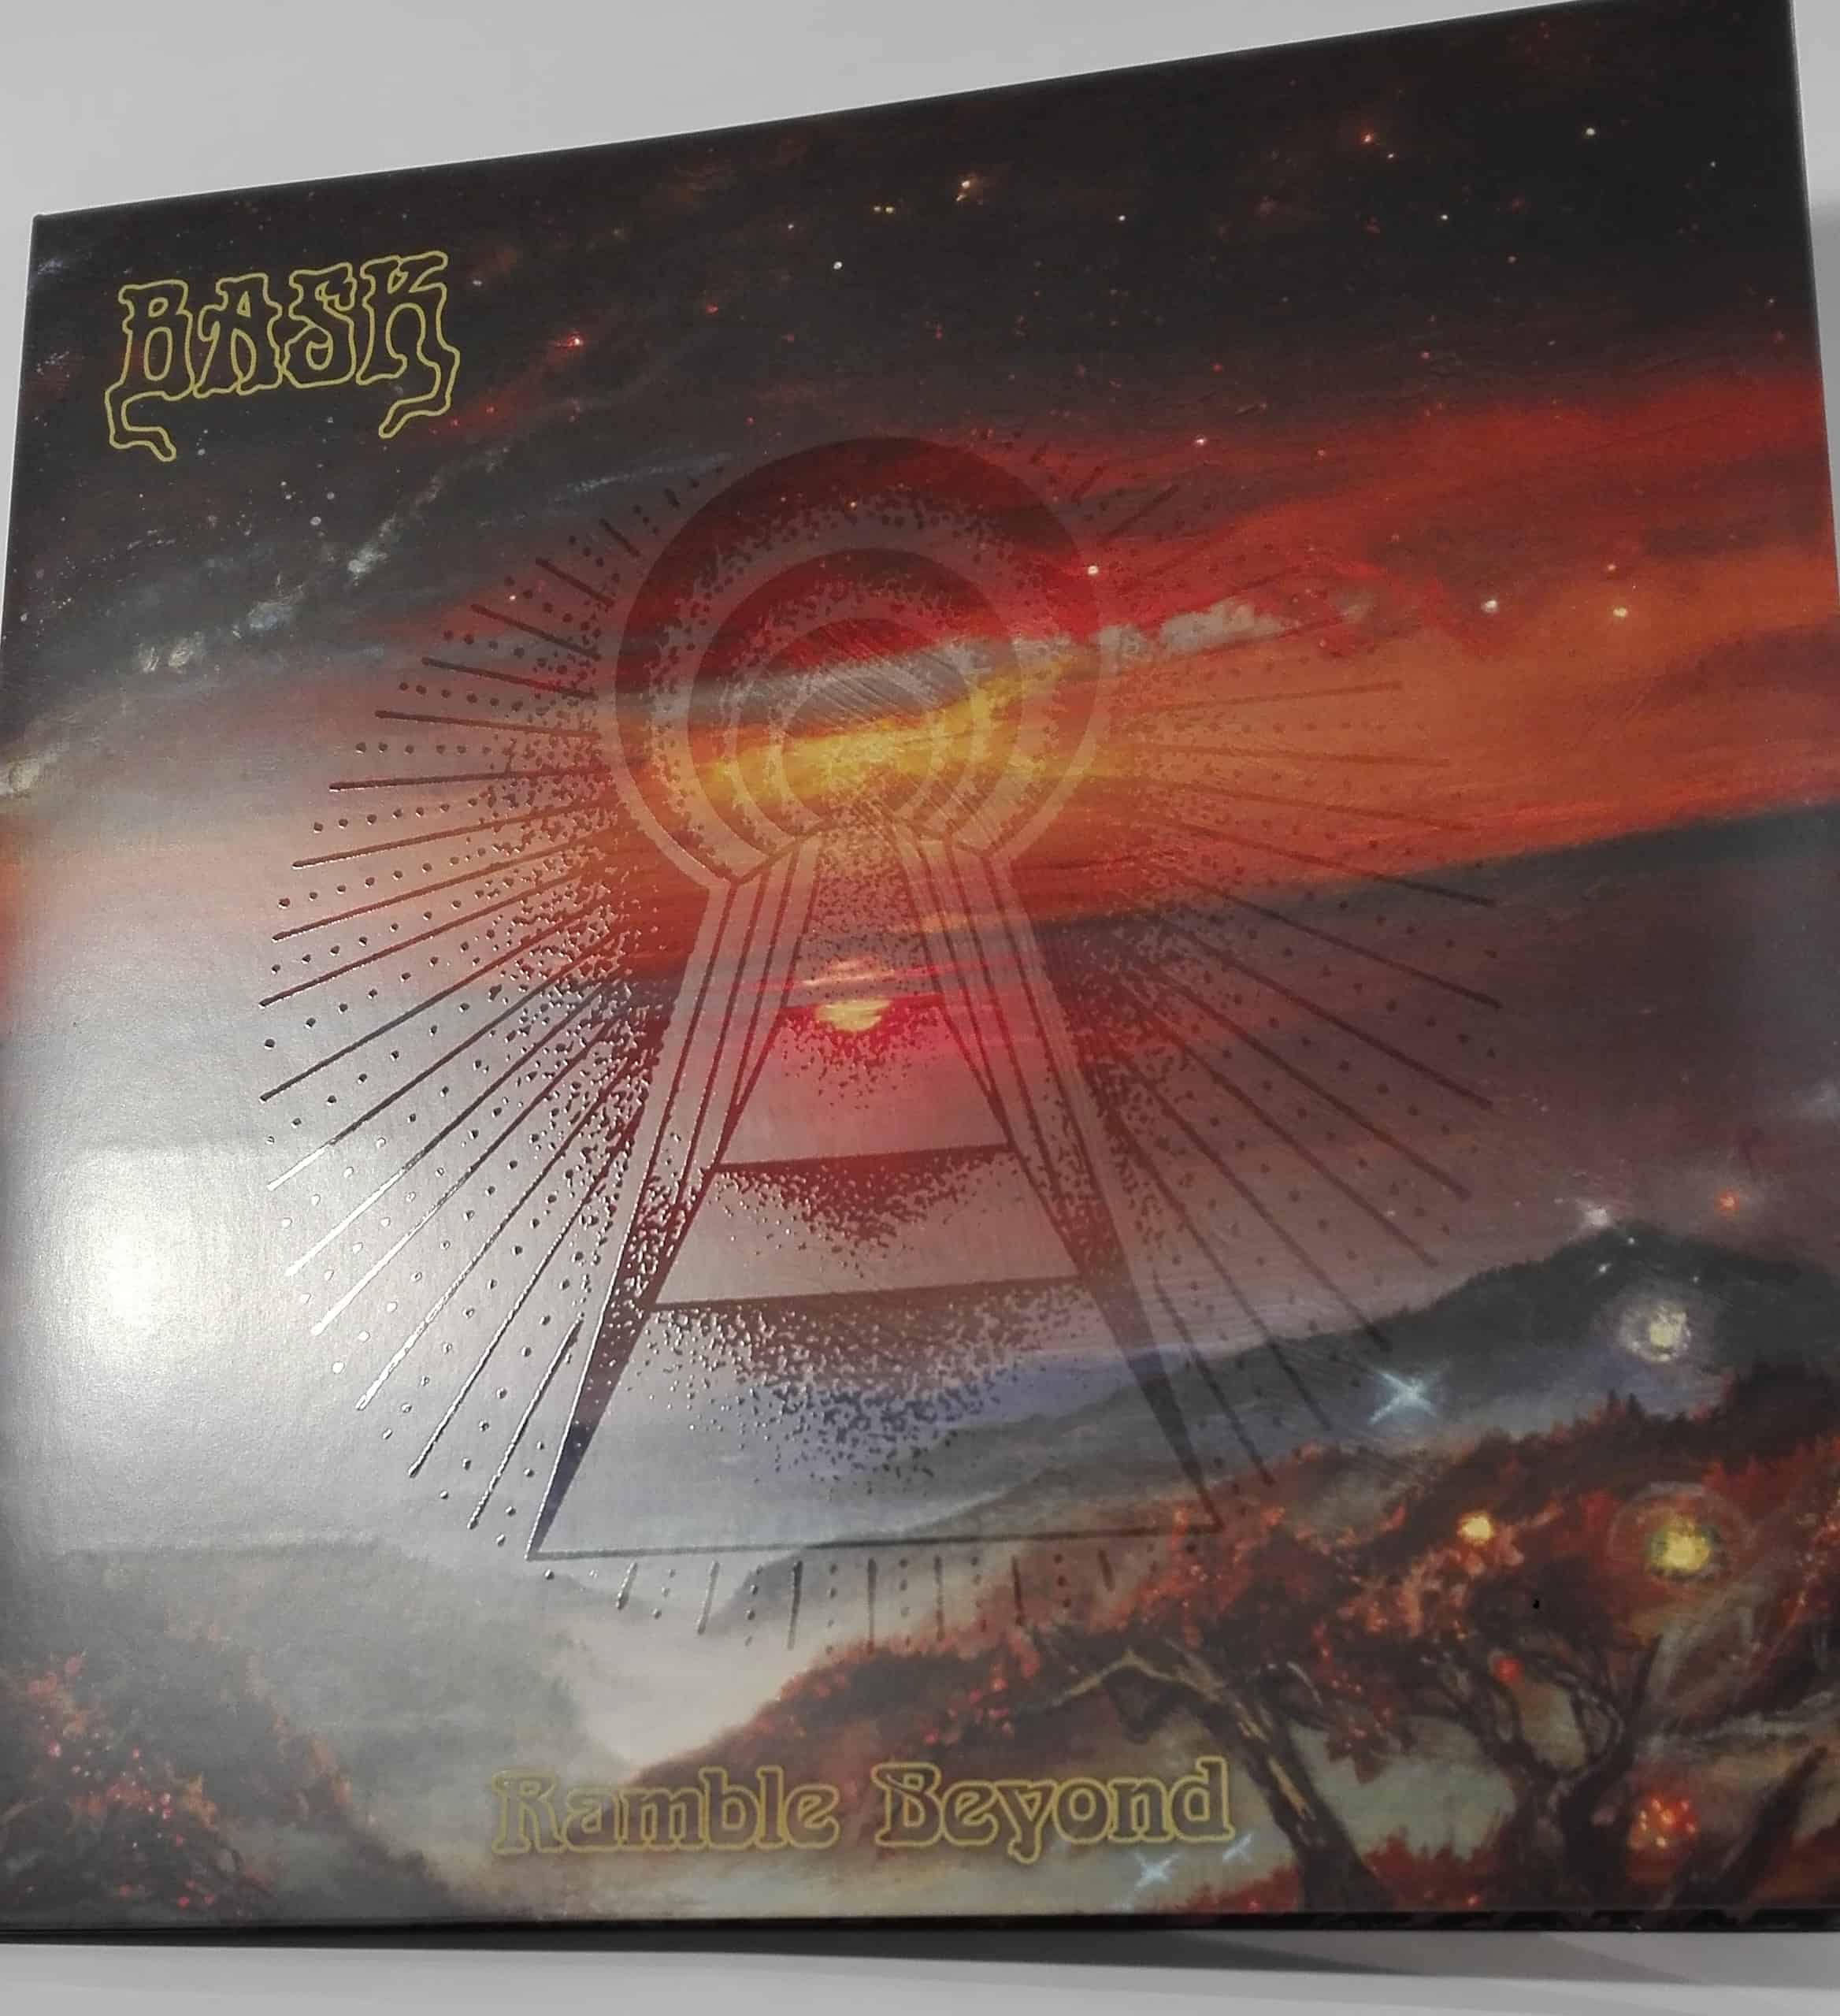 Bask - Ramble Beyond LP/CD/digital Pressing Info: 125x braun/schwarz marbled (mailorder exclusive), 375x orange vinyl